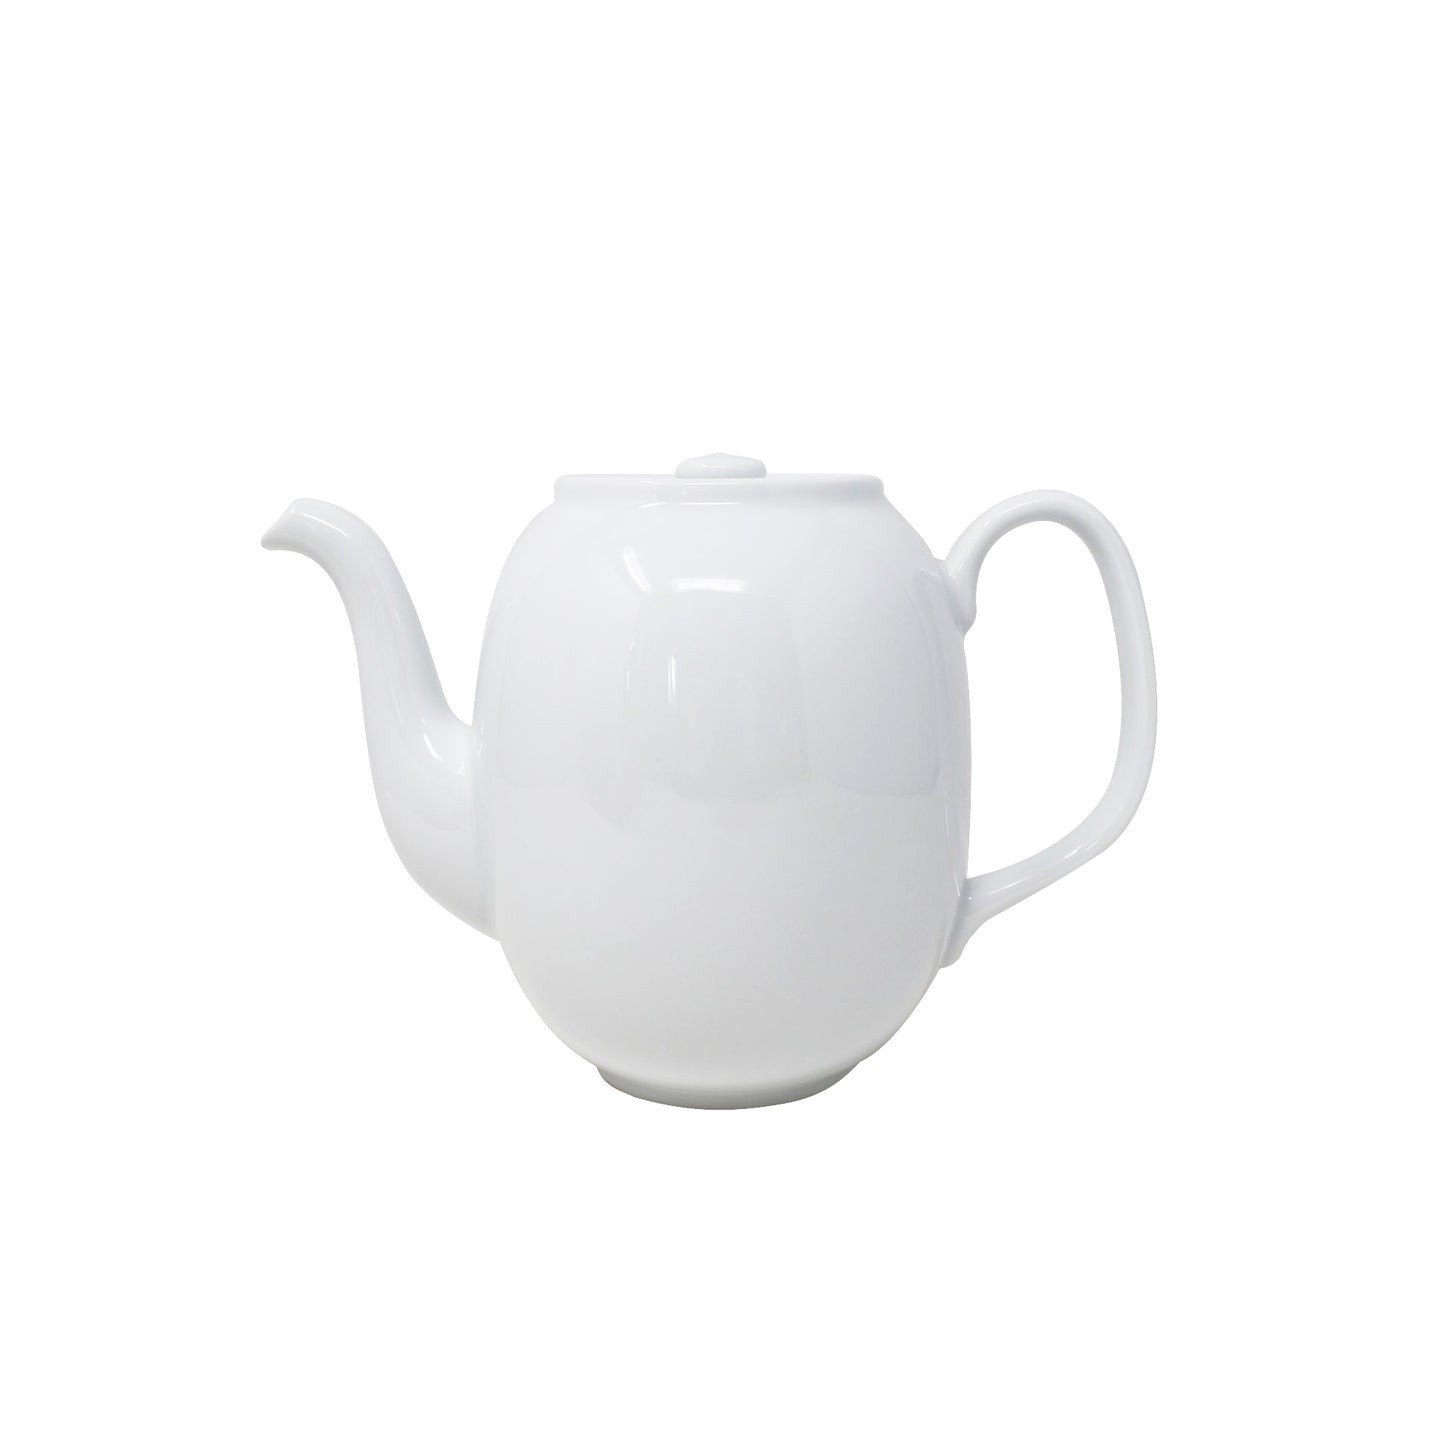 Noritake Lifestyle White Tea Pot 1.2L